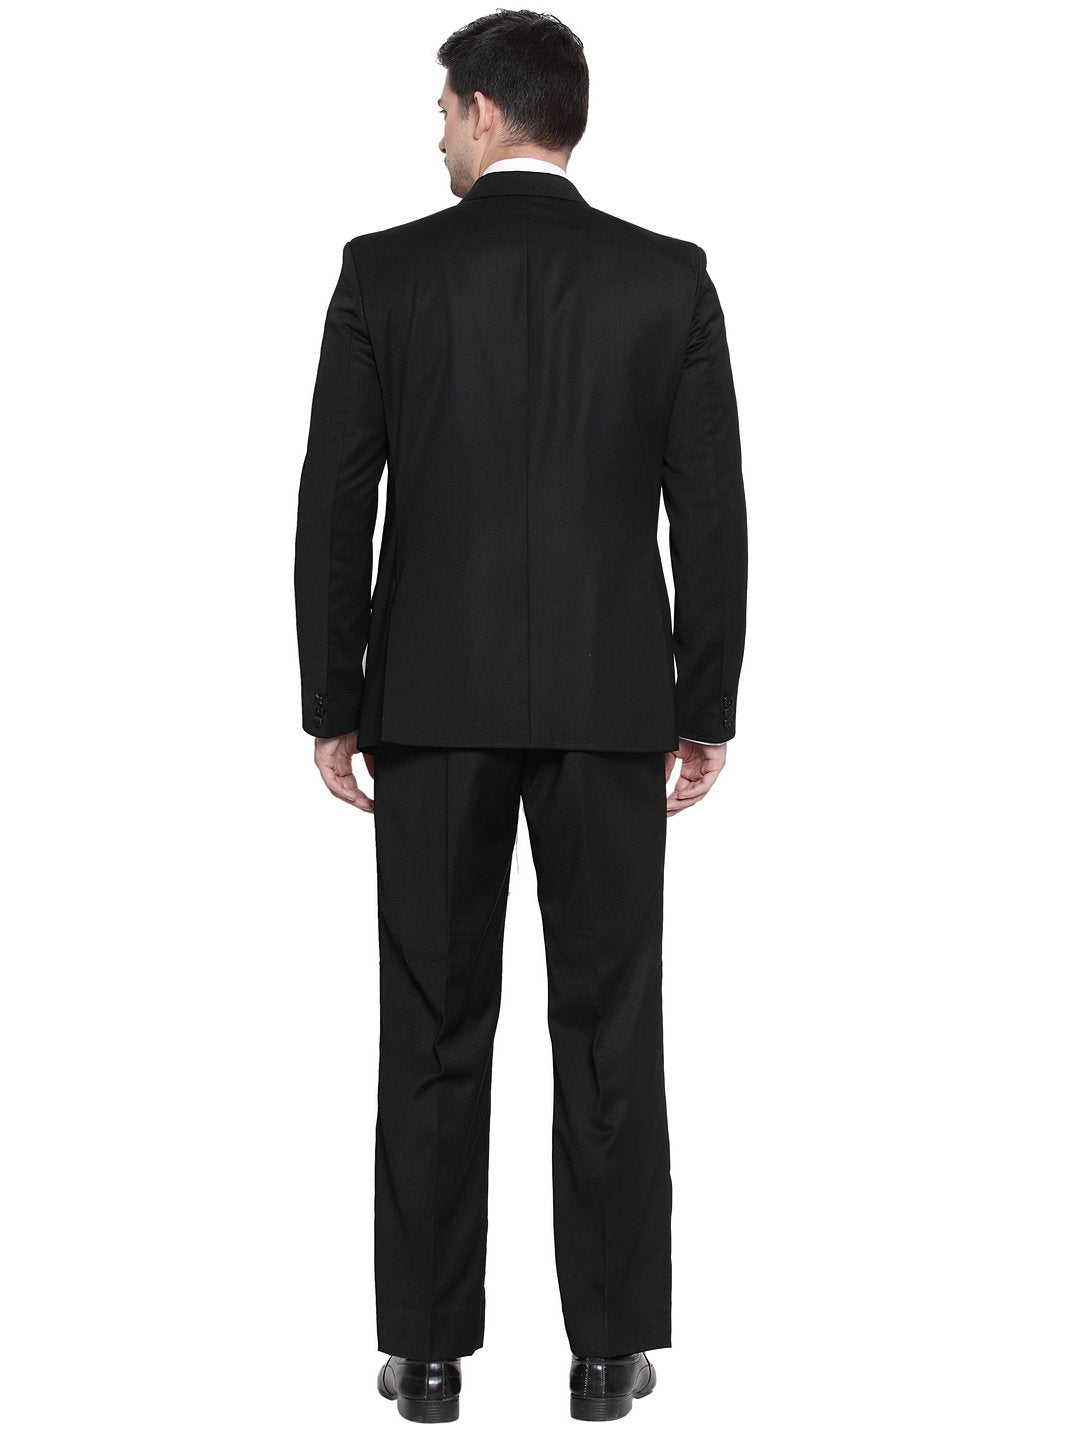 Discover 157+ luxurazi 3 piece suit latest